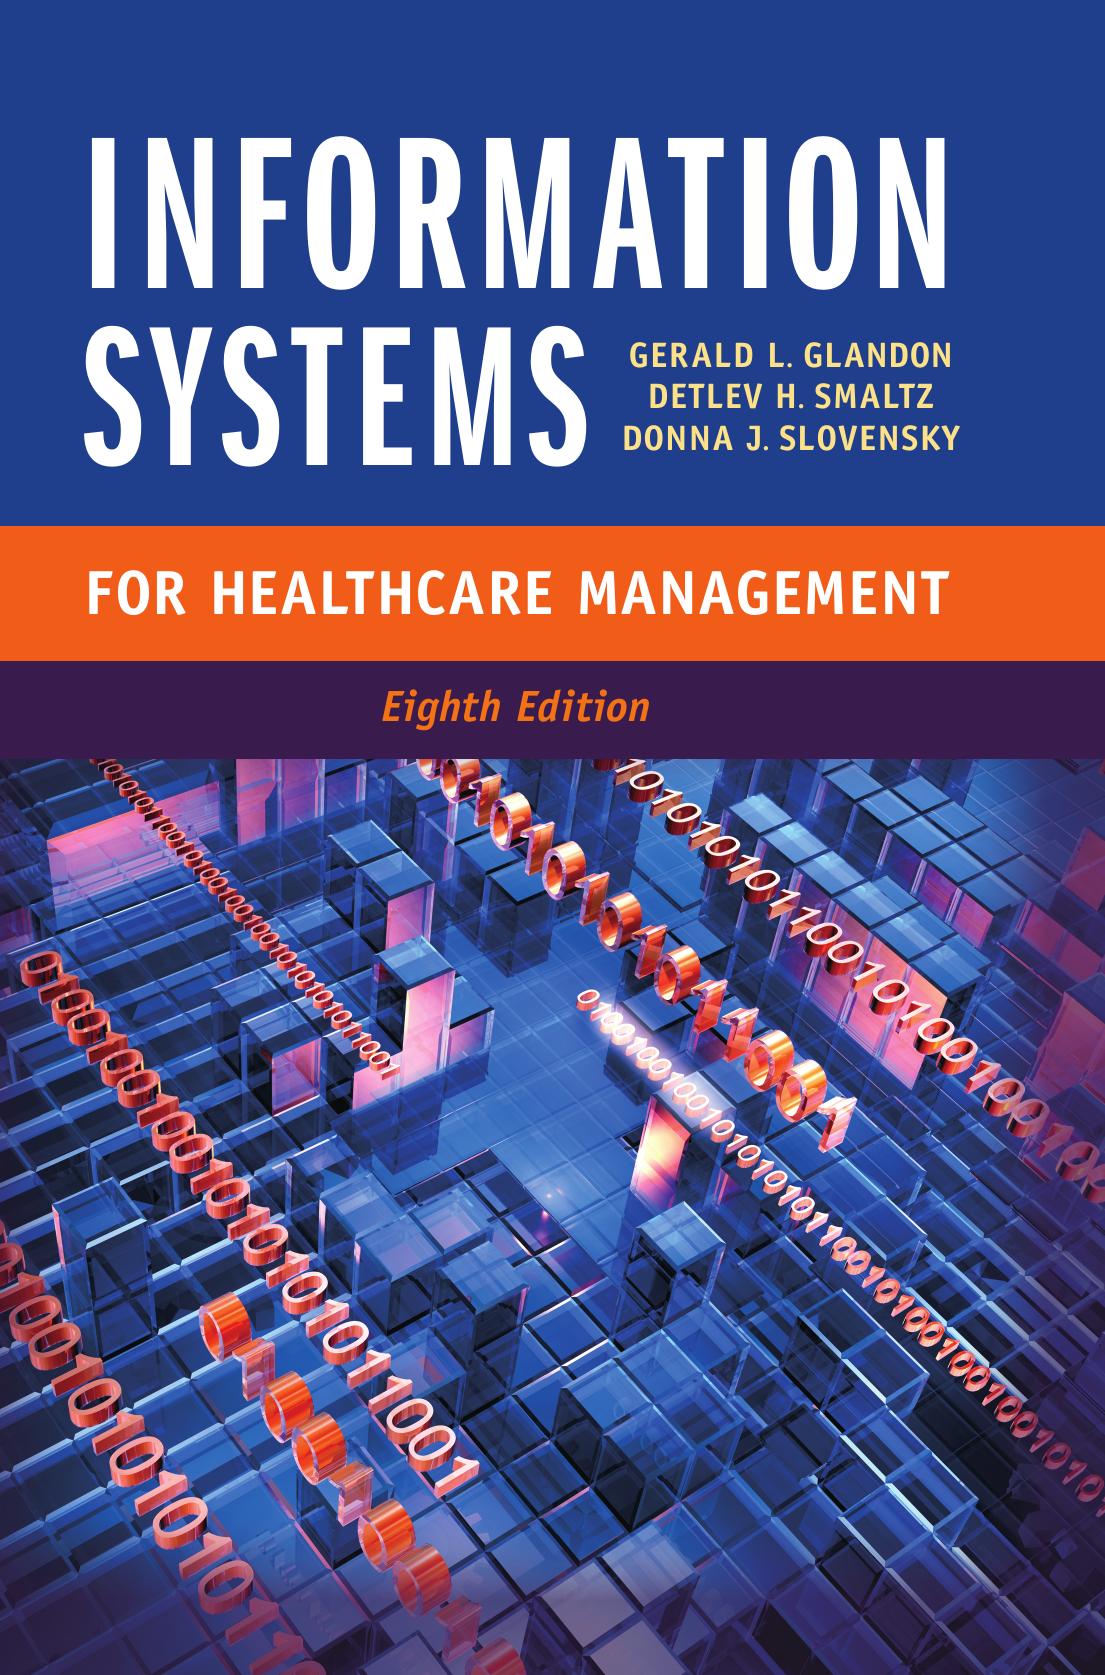 Information Systems for Healthcare Management, Eighth Edition by Gerald Glandon; Detlev H. Smaltz; Donna J. Slovensky